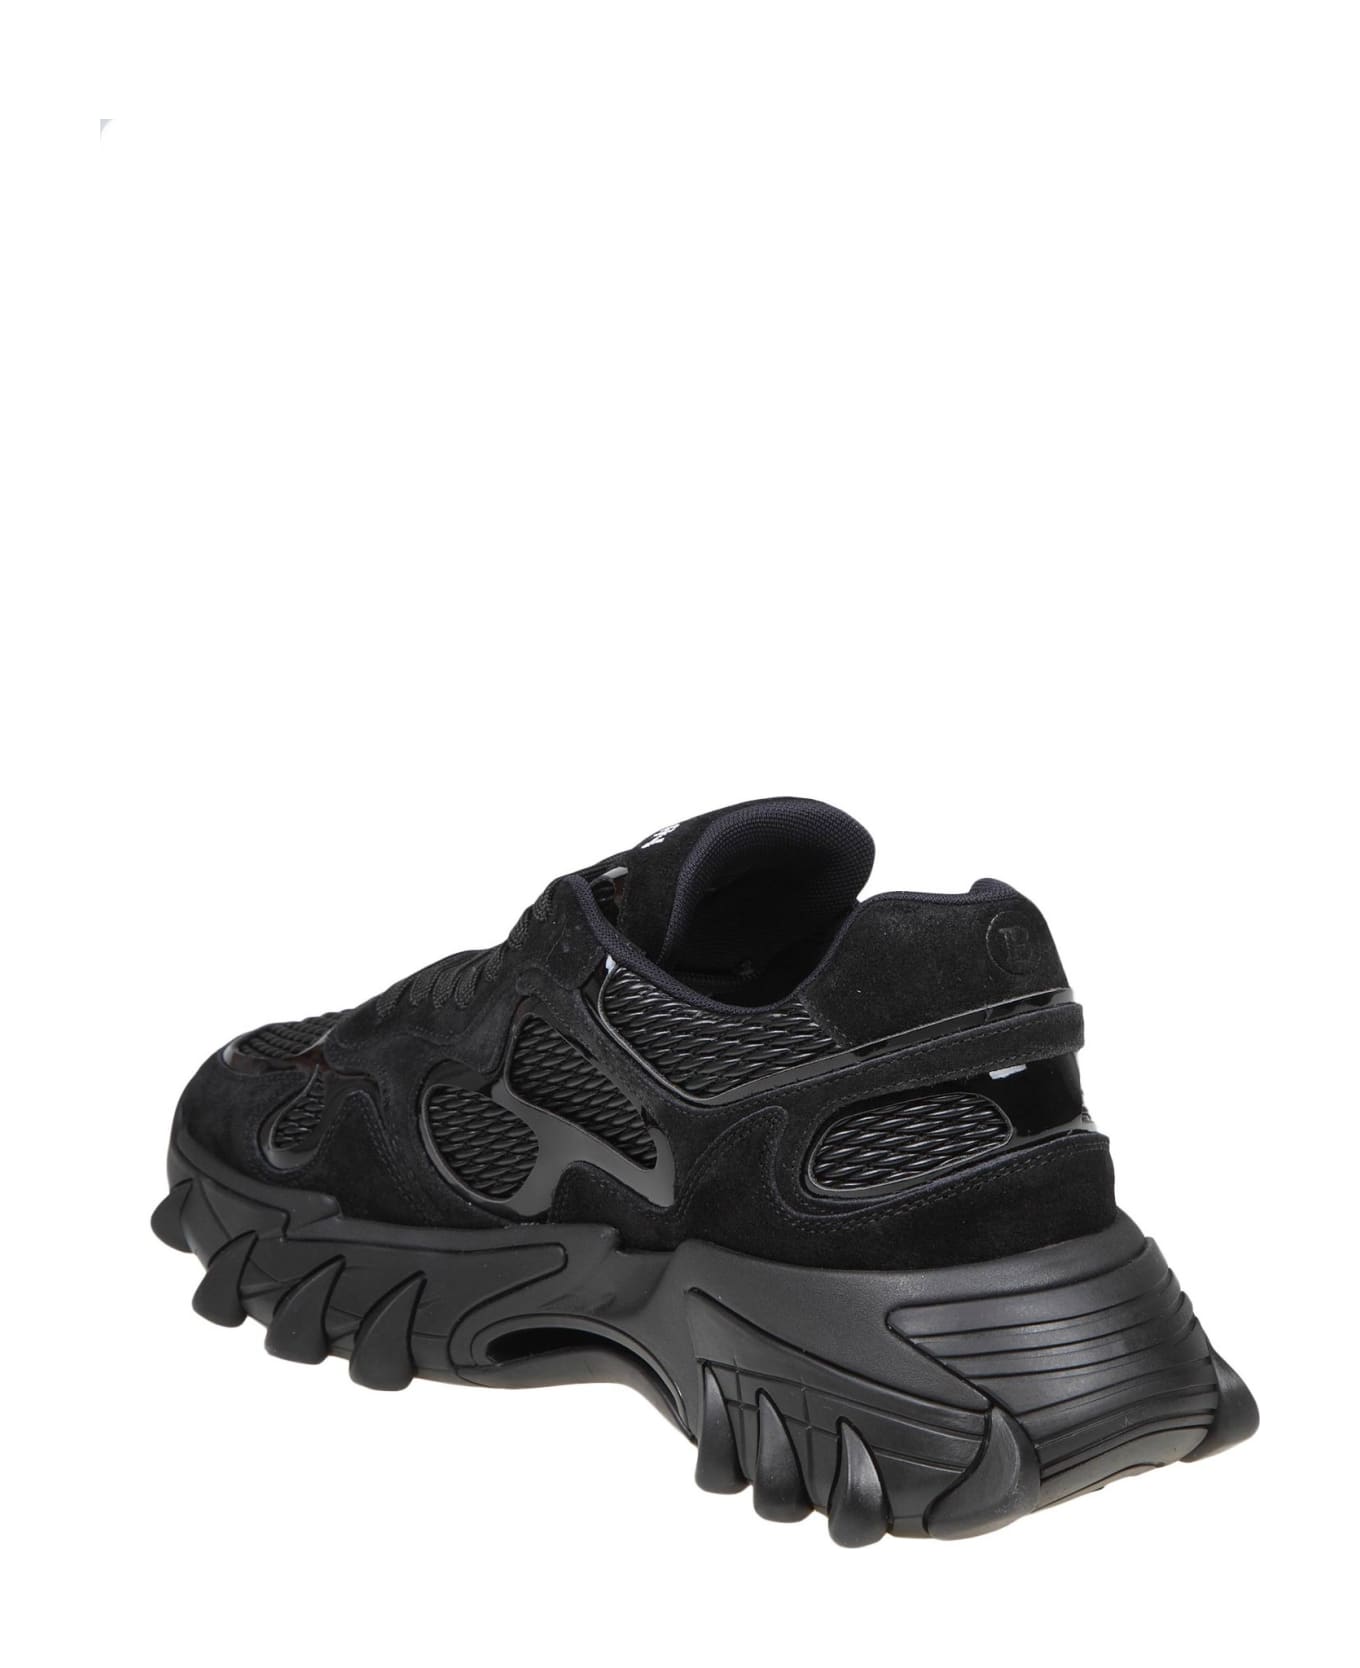 Balmain B-east Sneakers In Black Leather And Mesh - Black